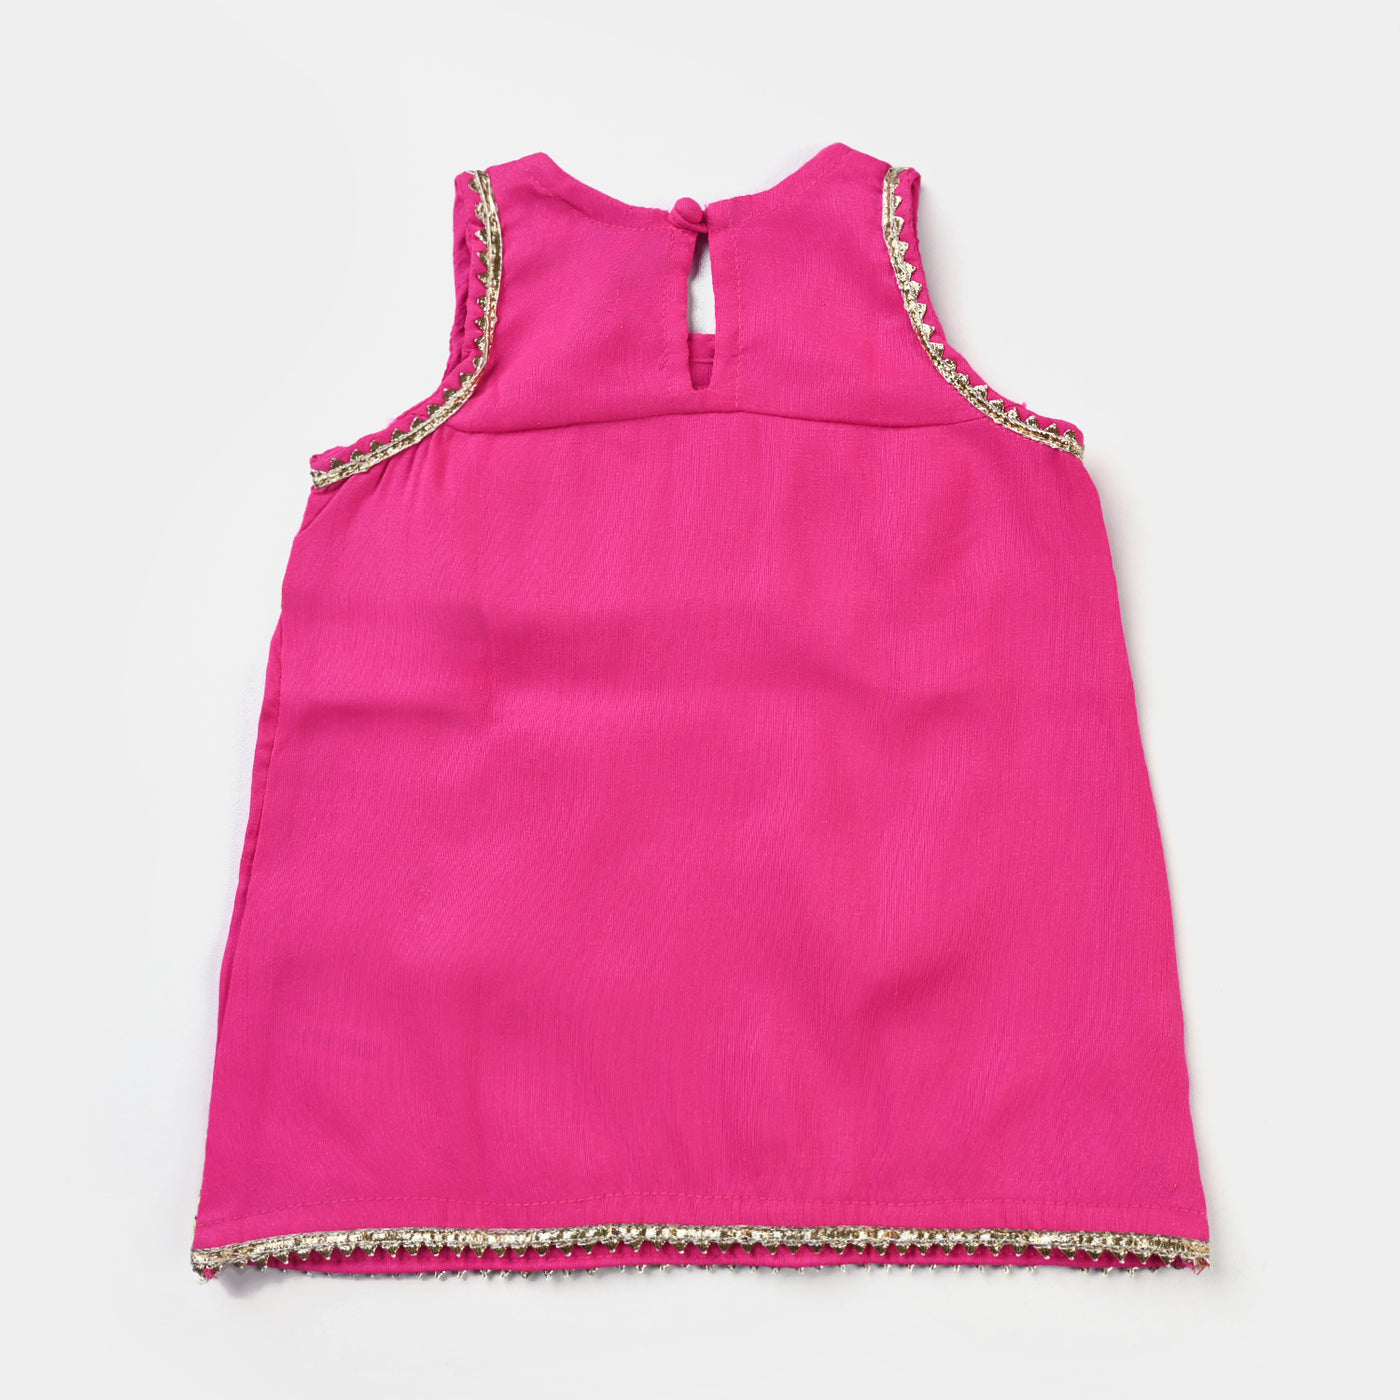 Infant Girls Raw Silk 2PCs Suit Elegant-Pink